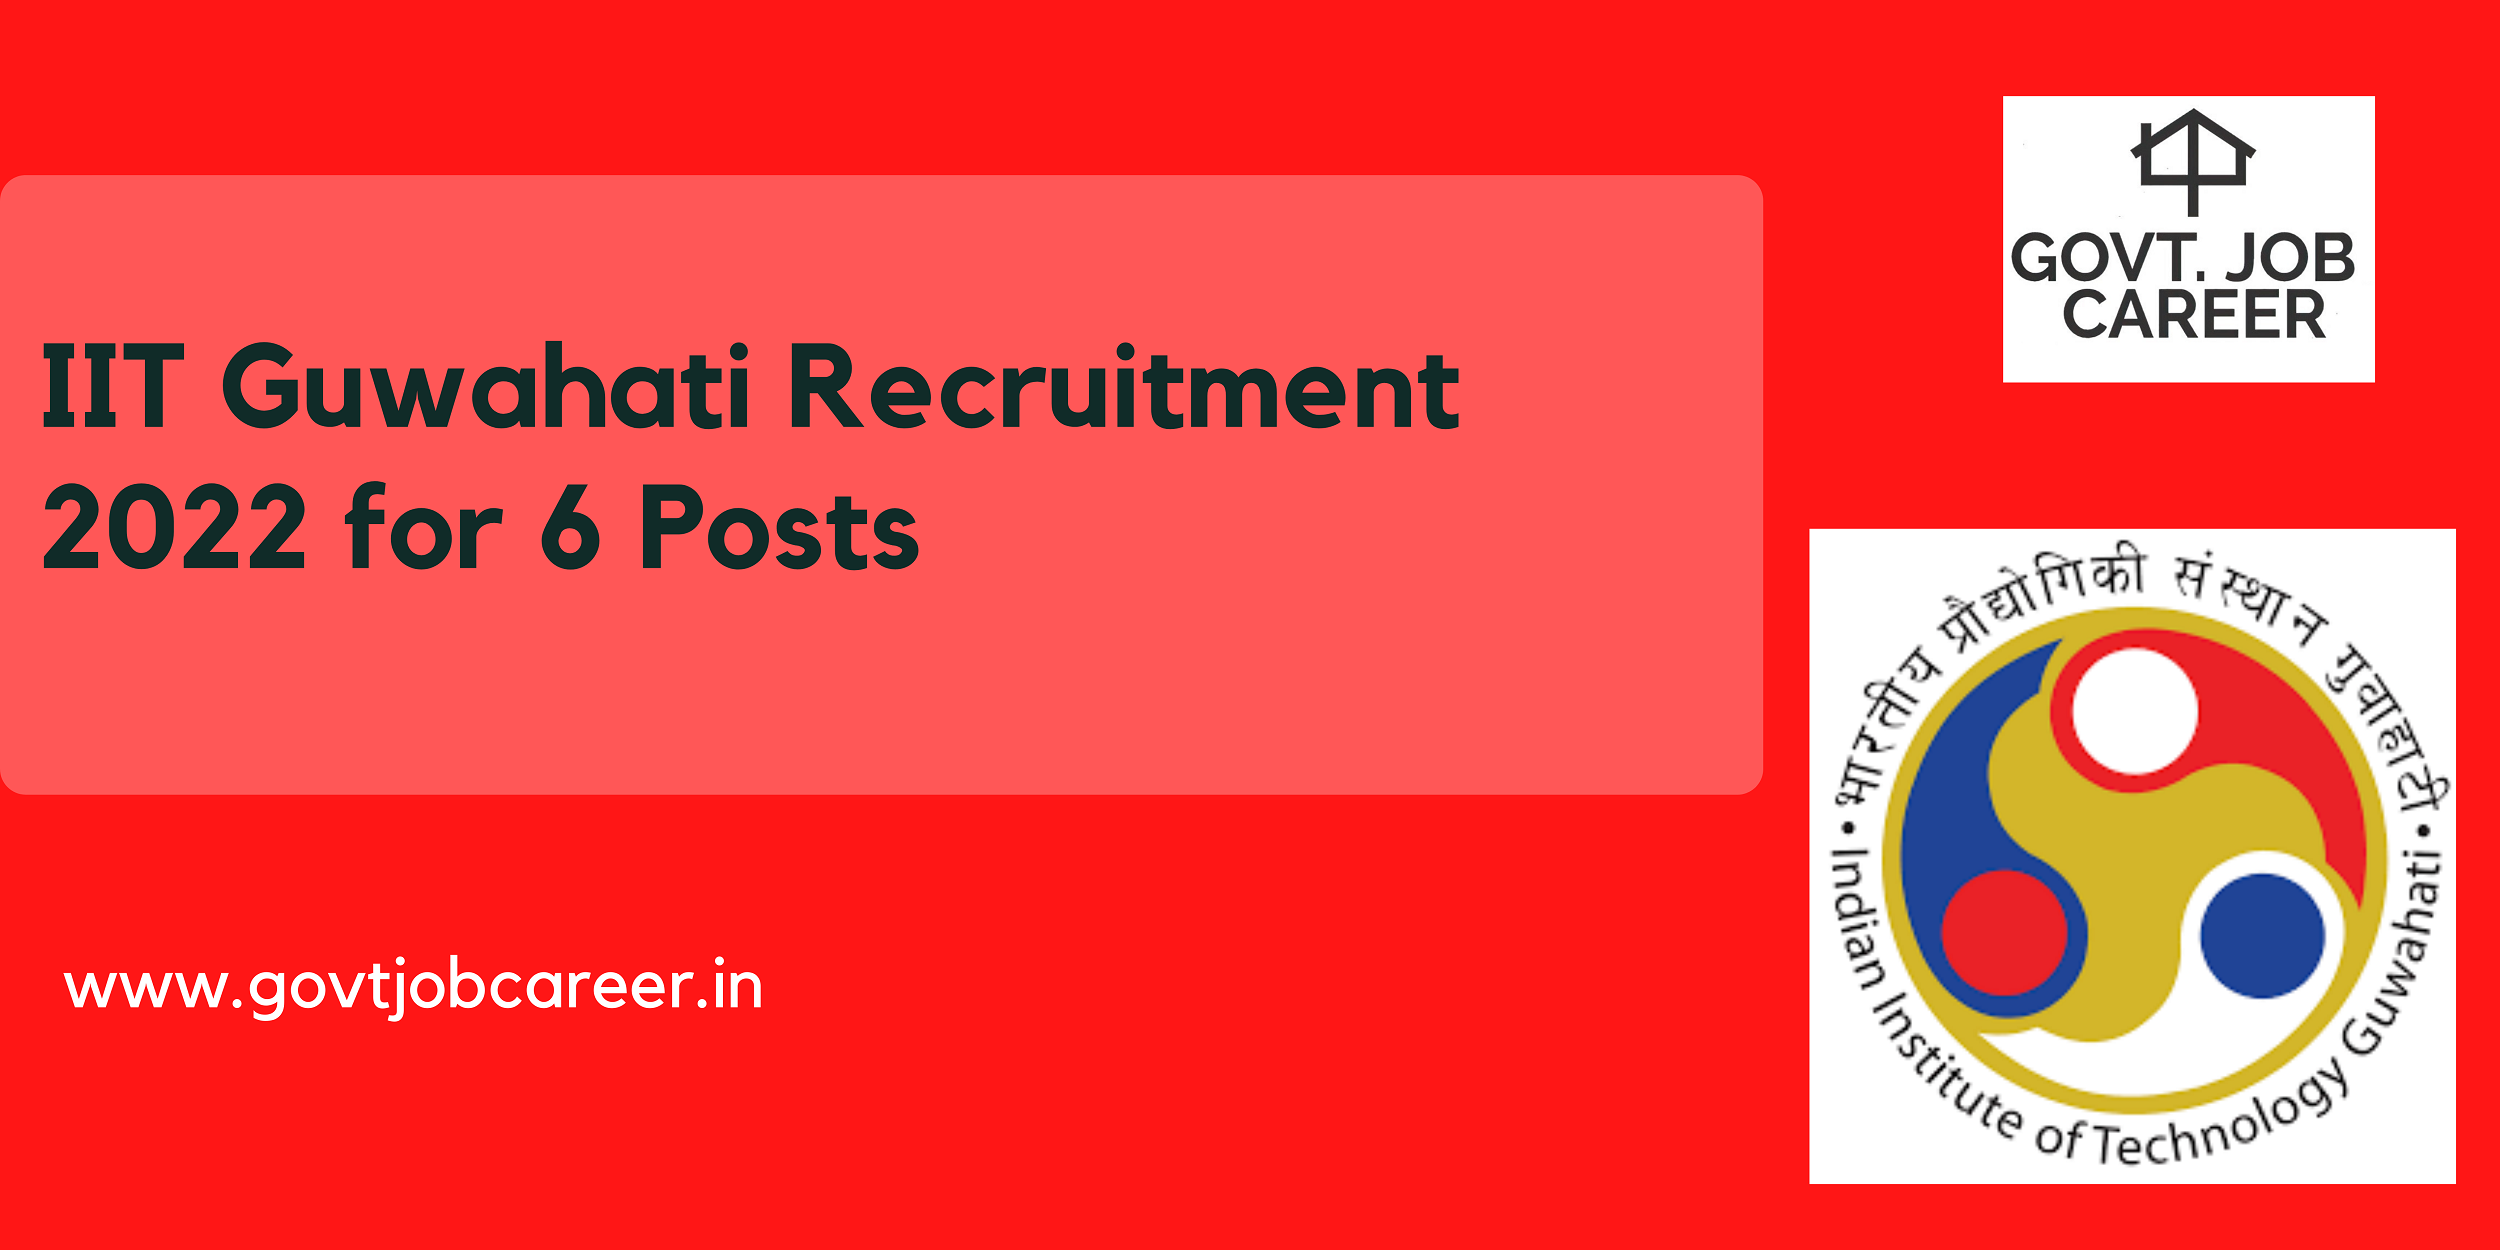 IIT Guwahati Recruitment 2022 for 6 Posts